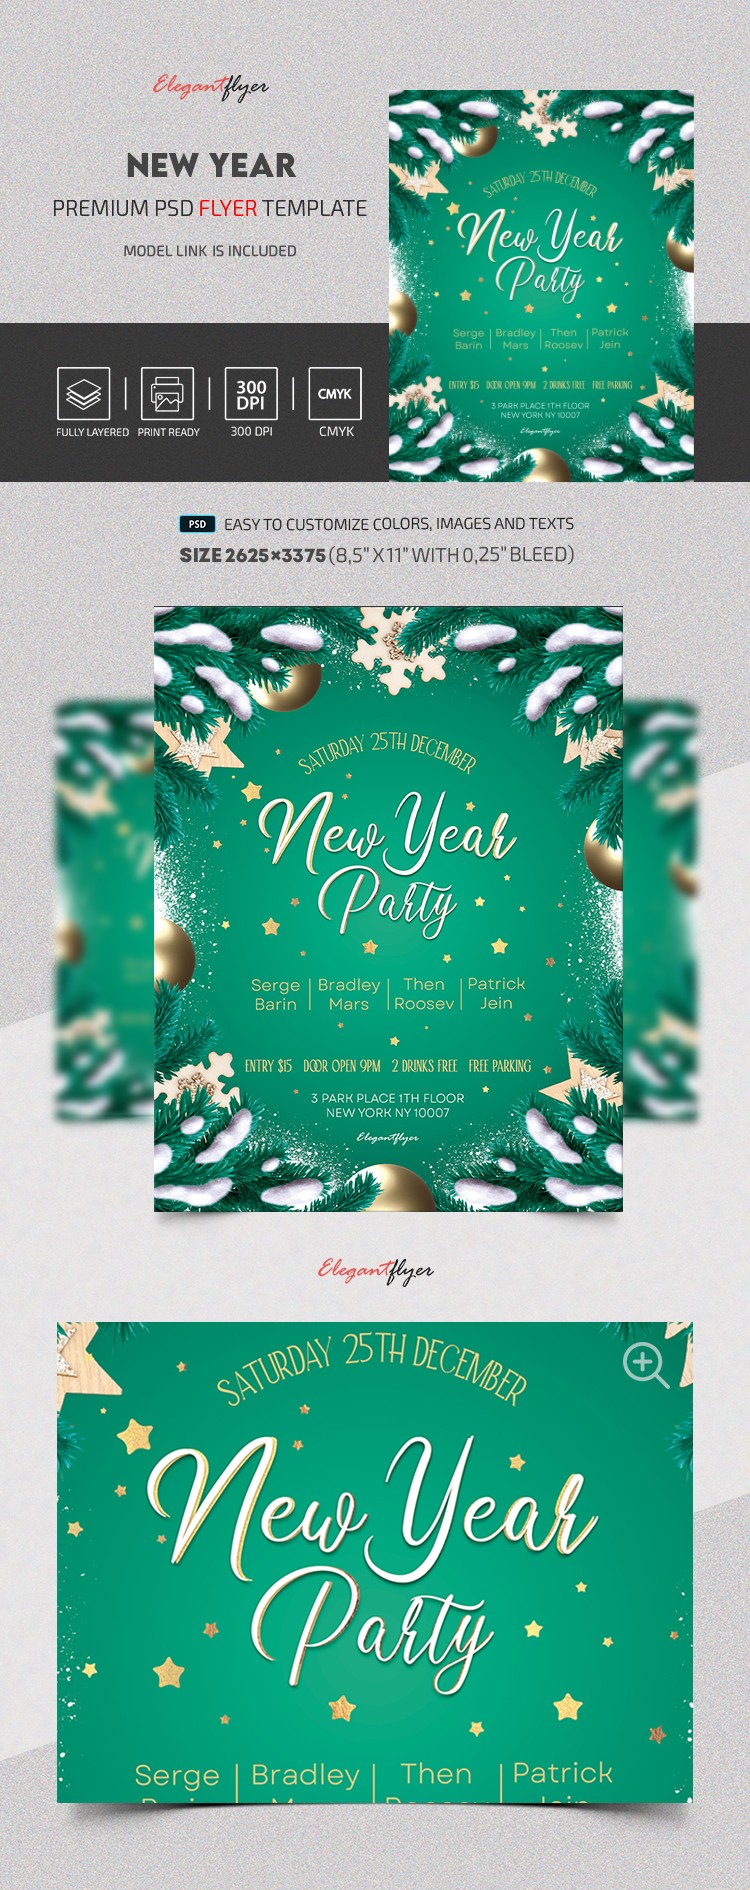 New Year Flyer by ElegantFlyer